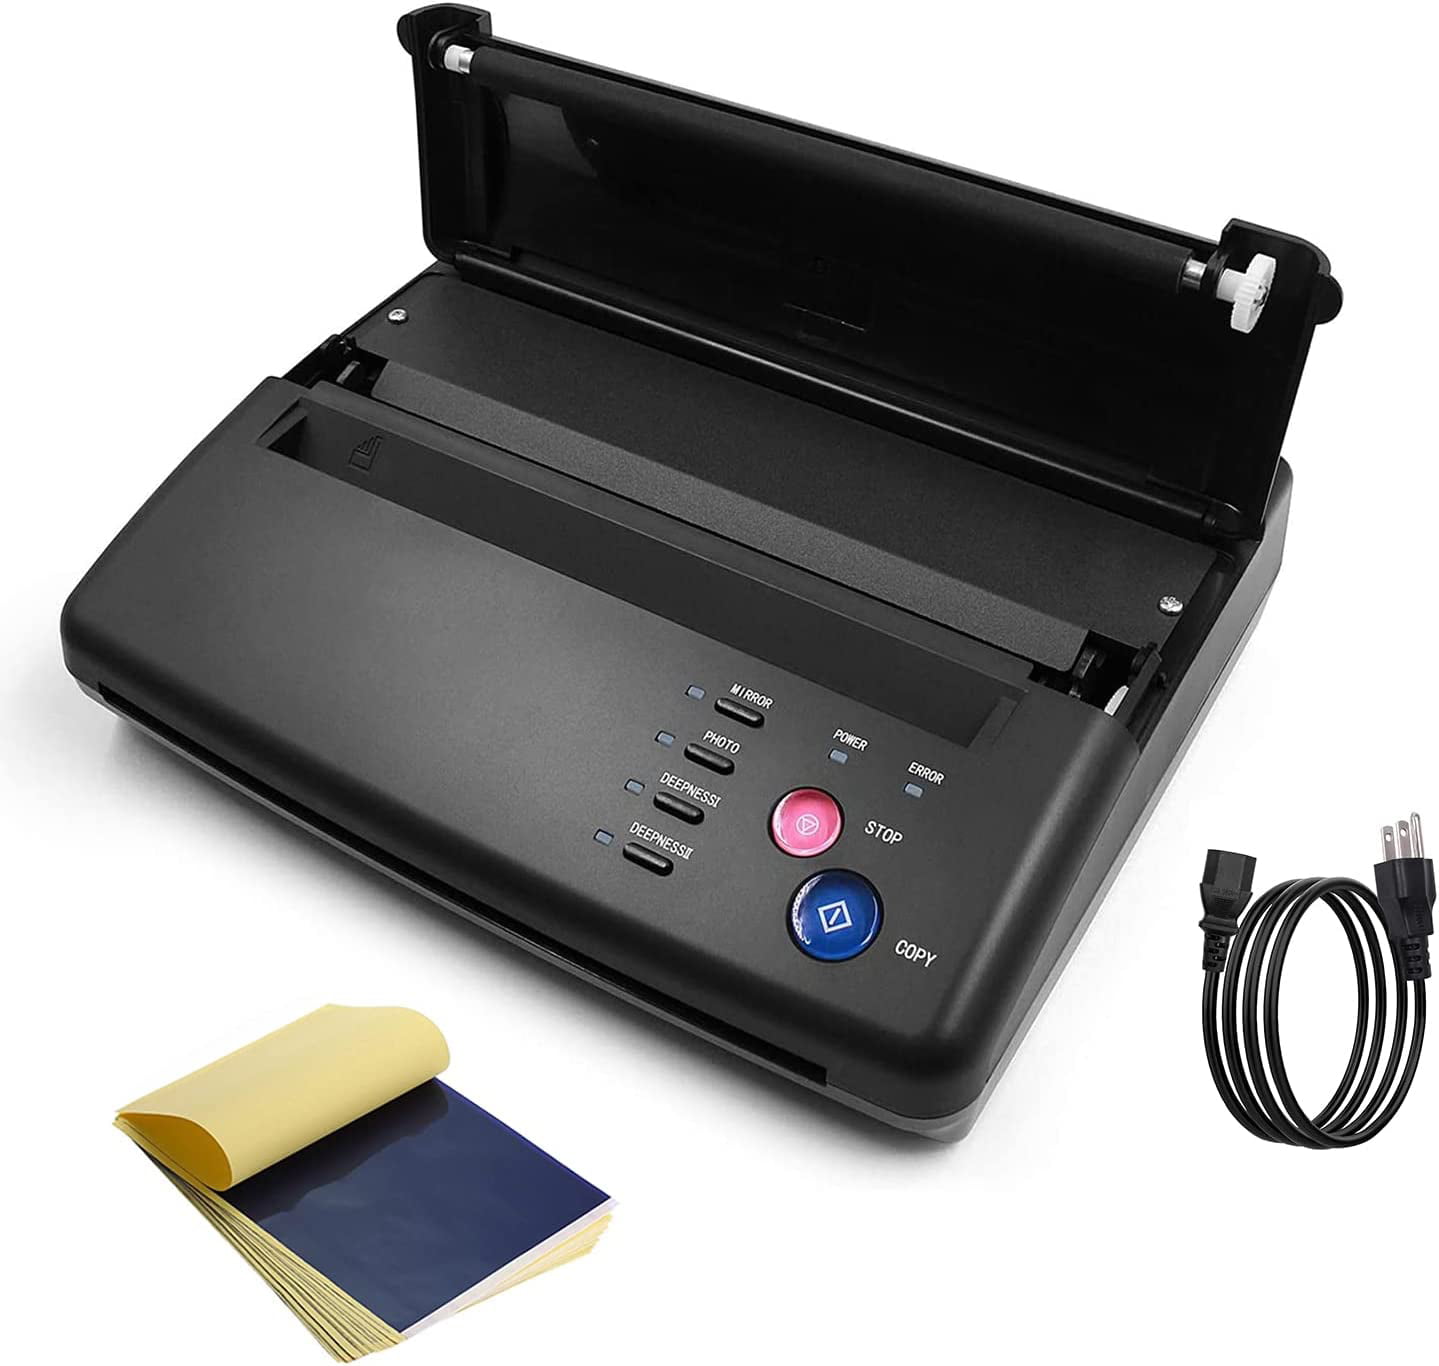 FSXUOLIPI Transfer Stencil Machine Thermal Copier Stencil Printer with  20pcs Transfer Paper for tattooing Artists (Black) 